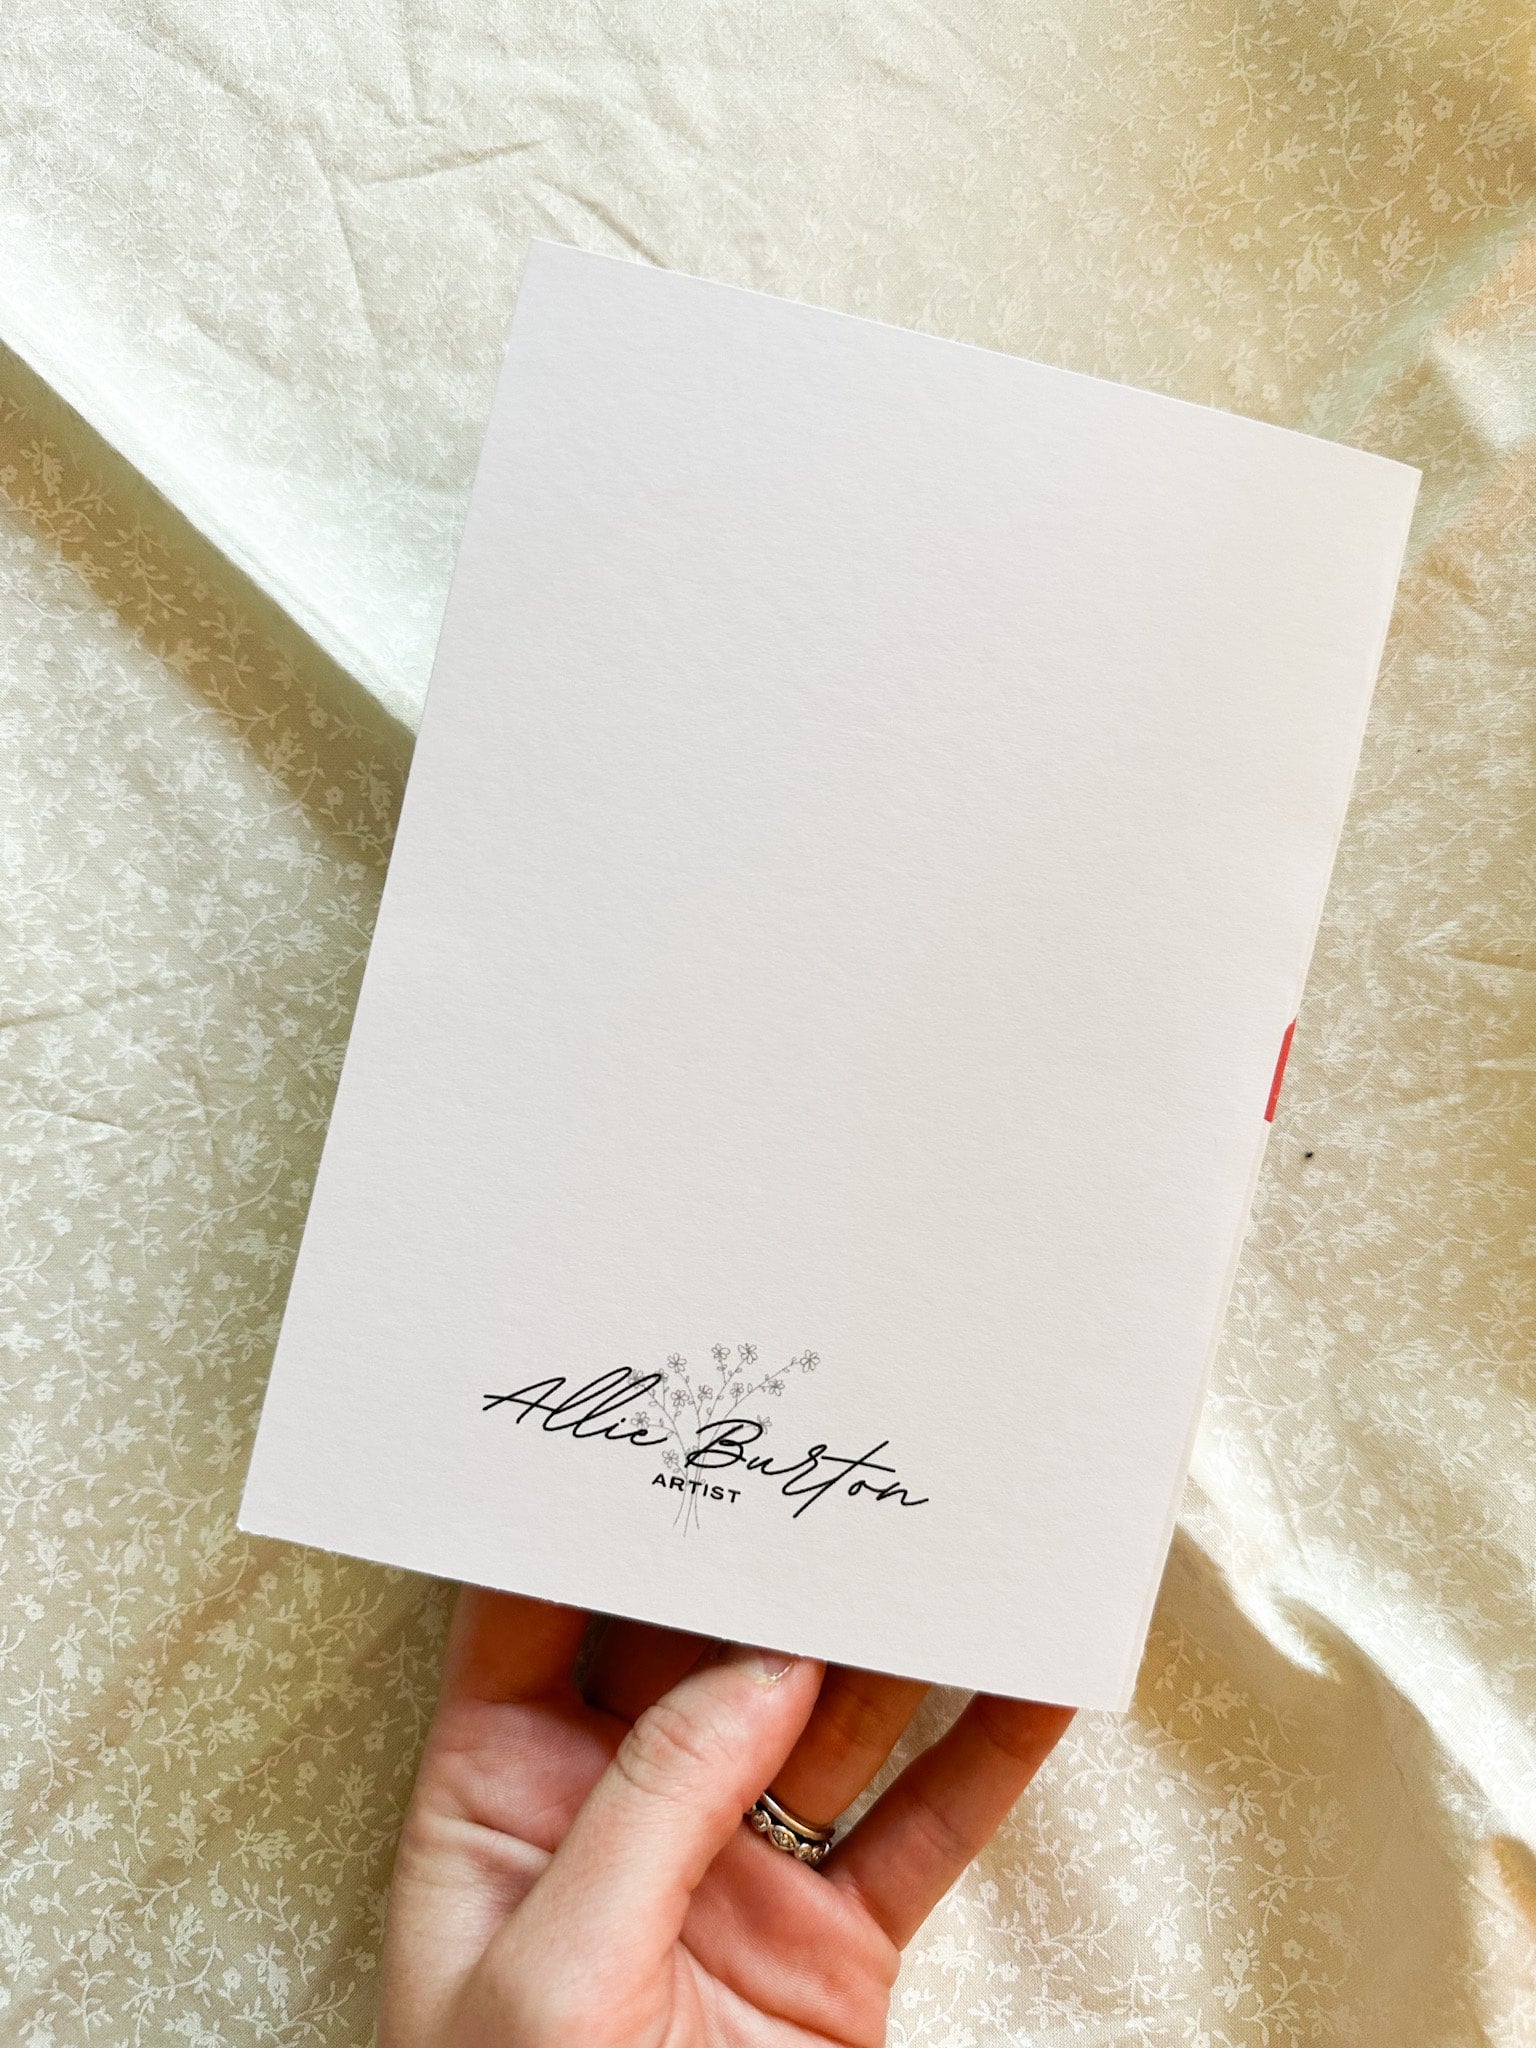 Back of greeting cards - Allie Burton Art